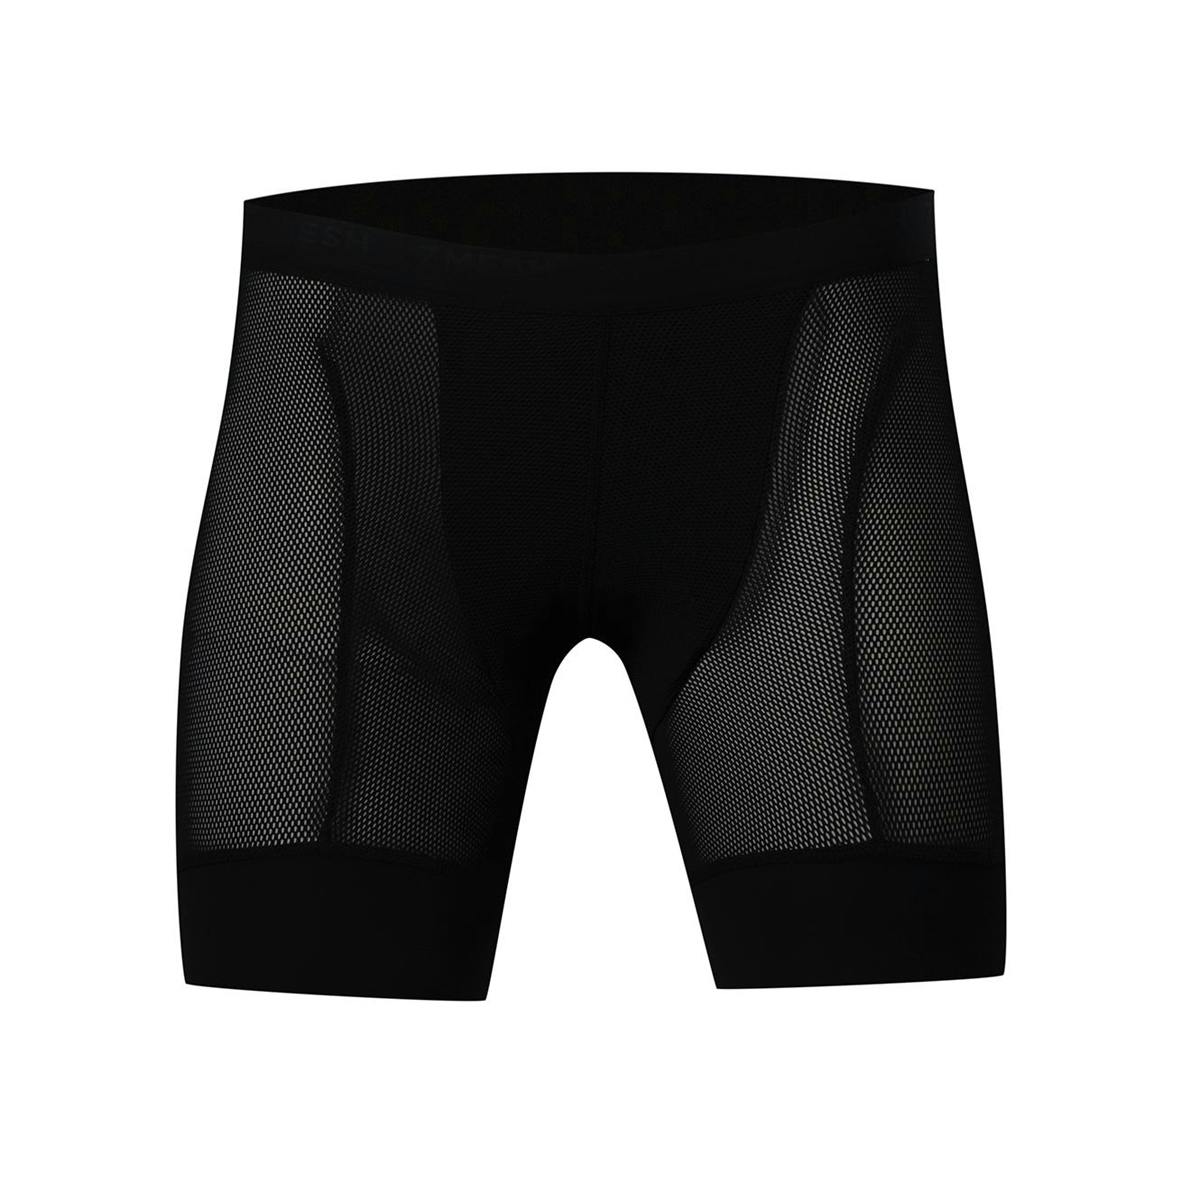 7Mesh Foundation Women's Shorts - Black - XS